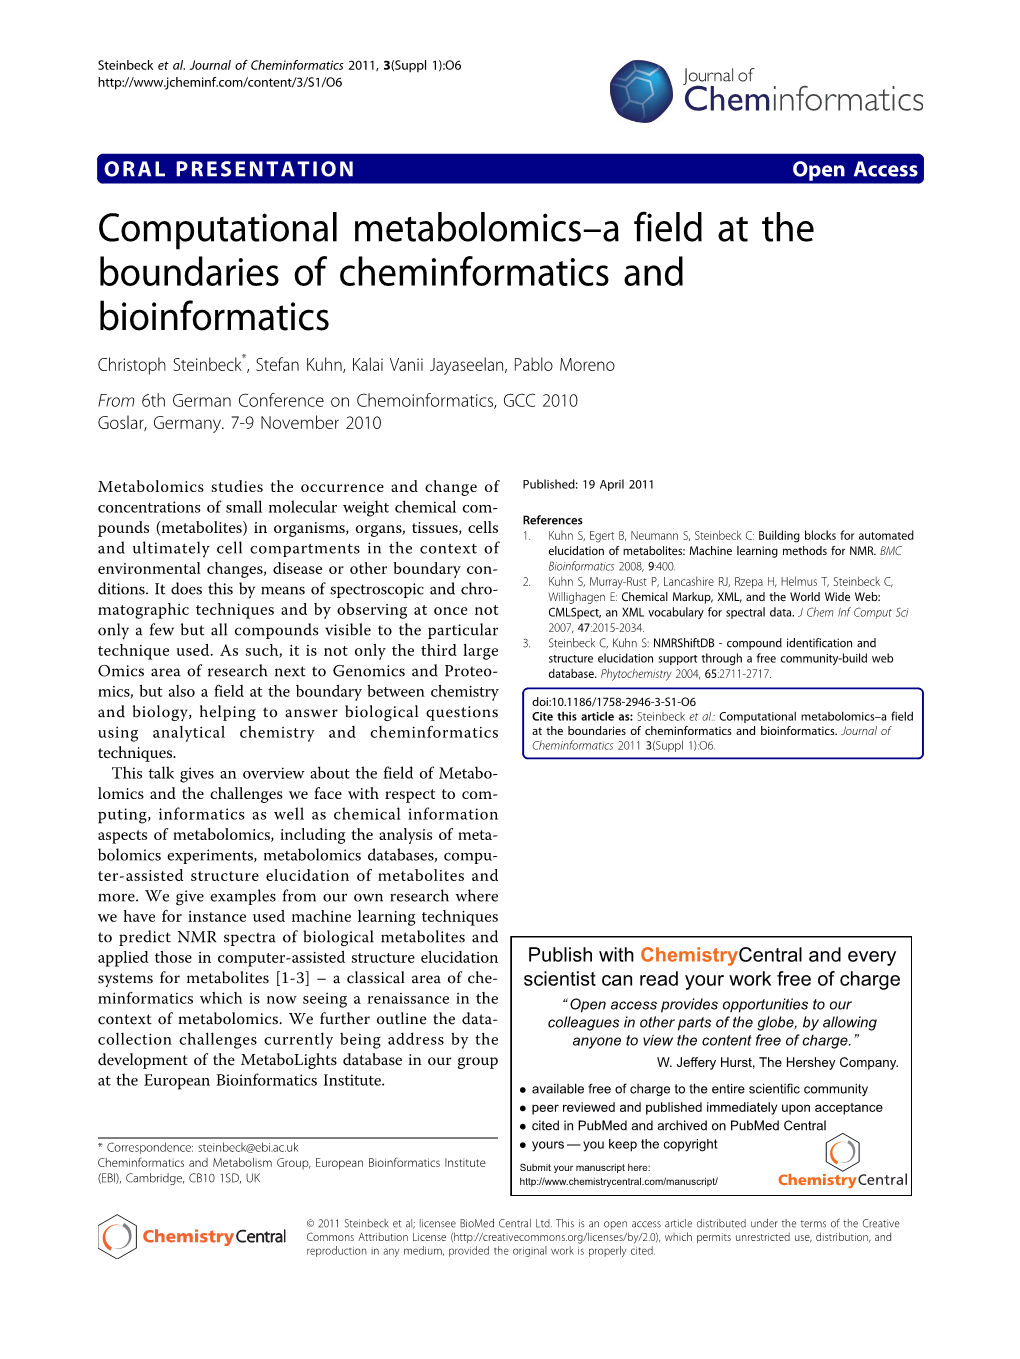 Computational Metabolomics-A Field at the Boundaries of Cheminformatics